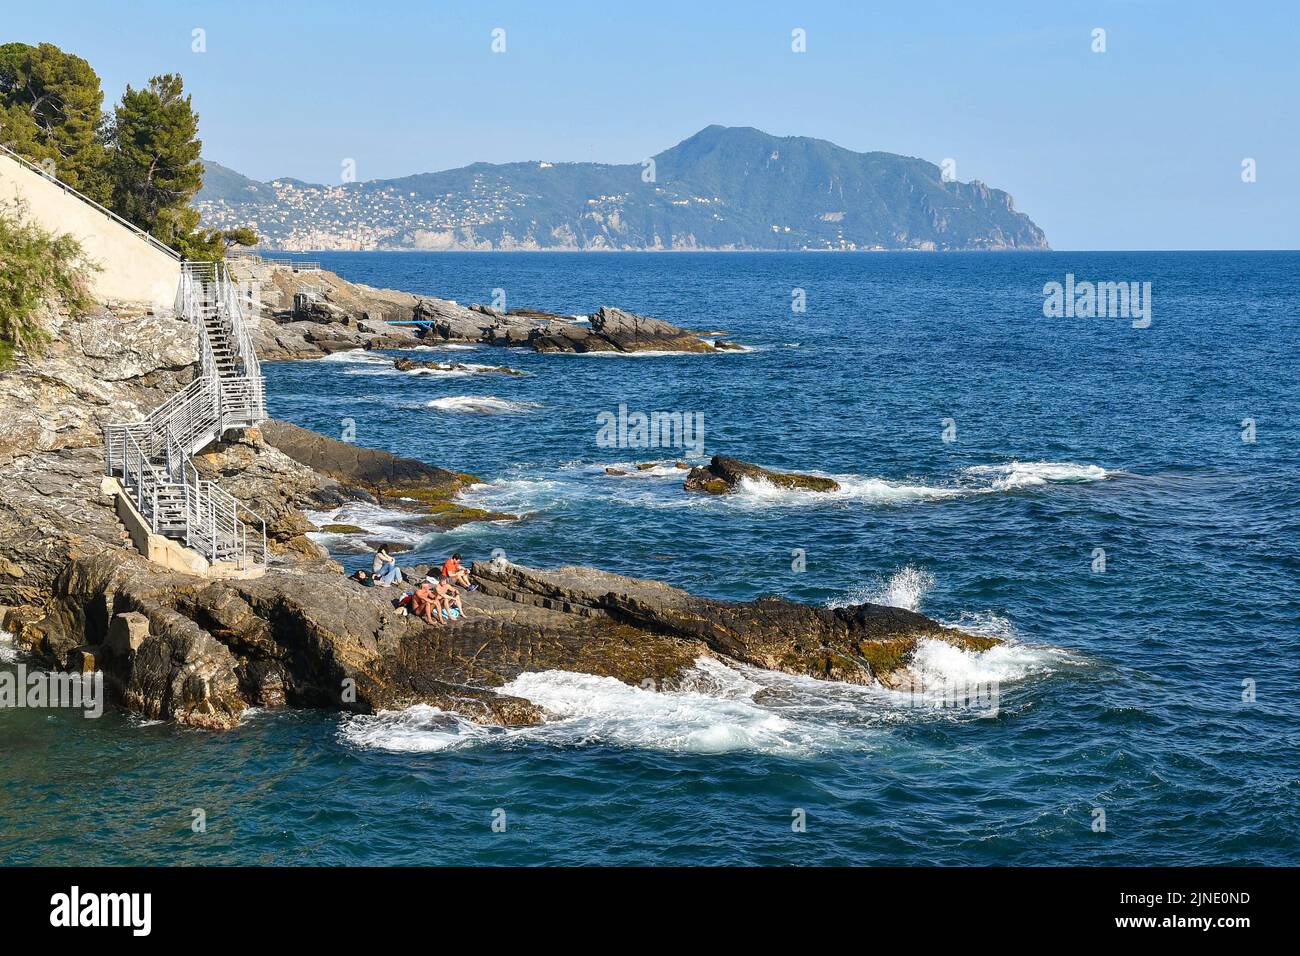 People sunbathing on the rocks by the sea of the Anita Garibaldi Promenade with the promontory of Portofino in the background, Nervi, Genoa, Liguria Stock Photo